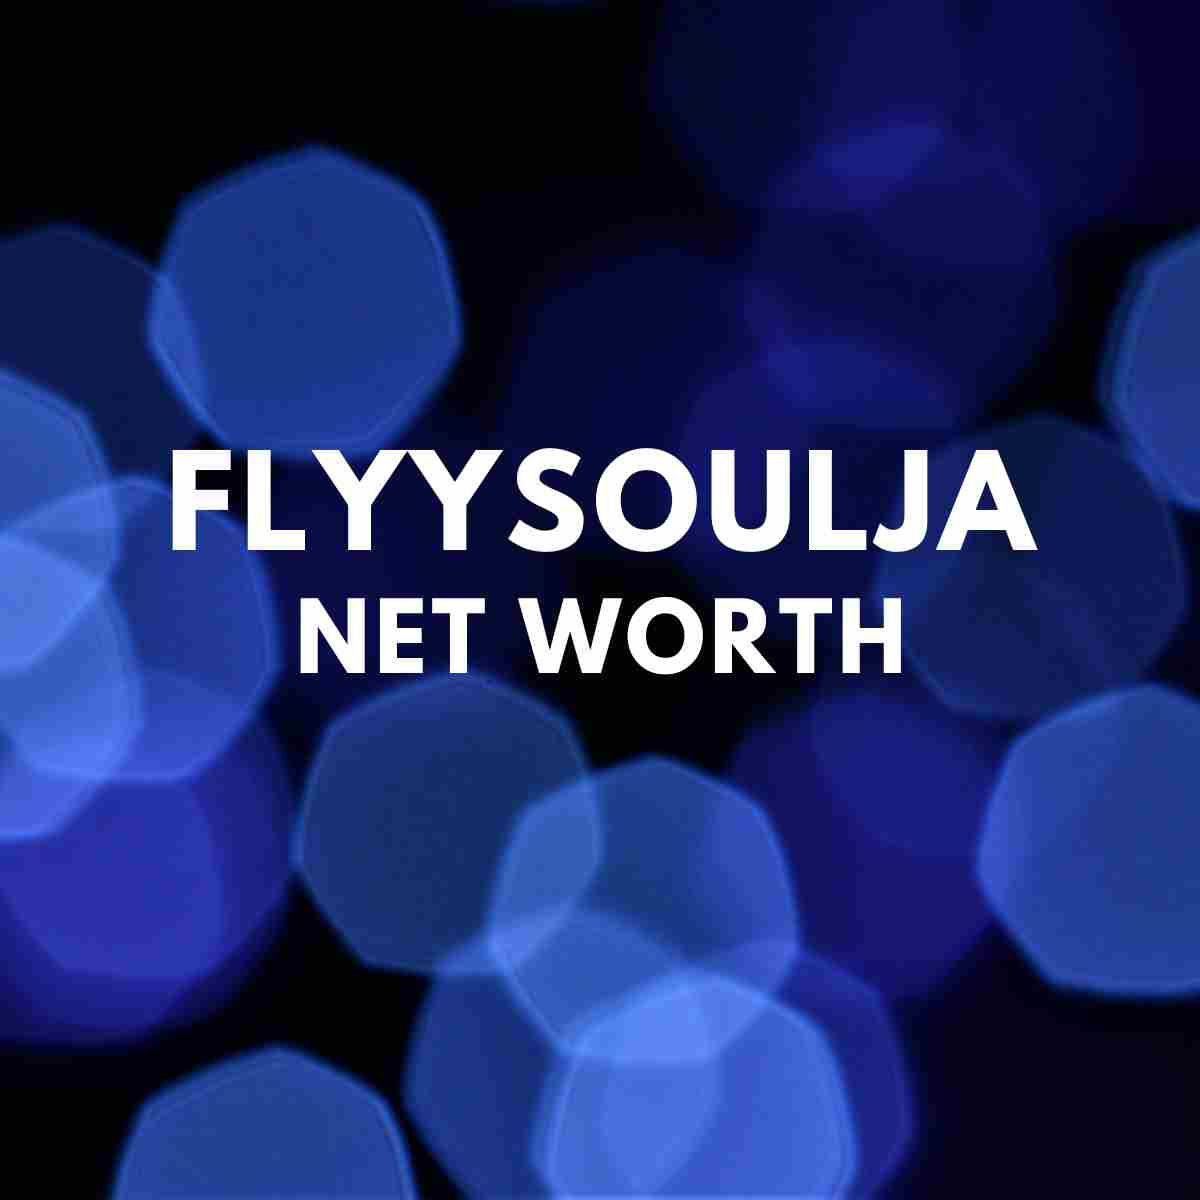 Flyysoulja NET WORTH